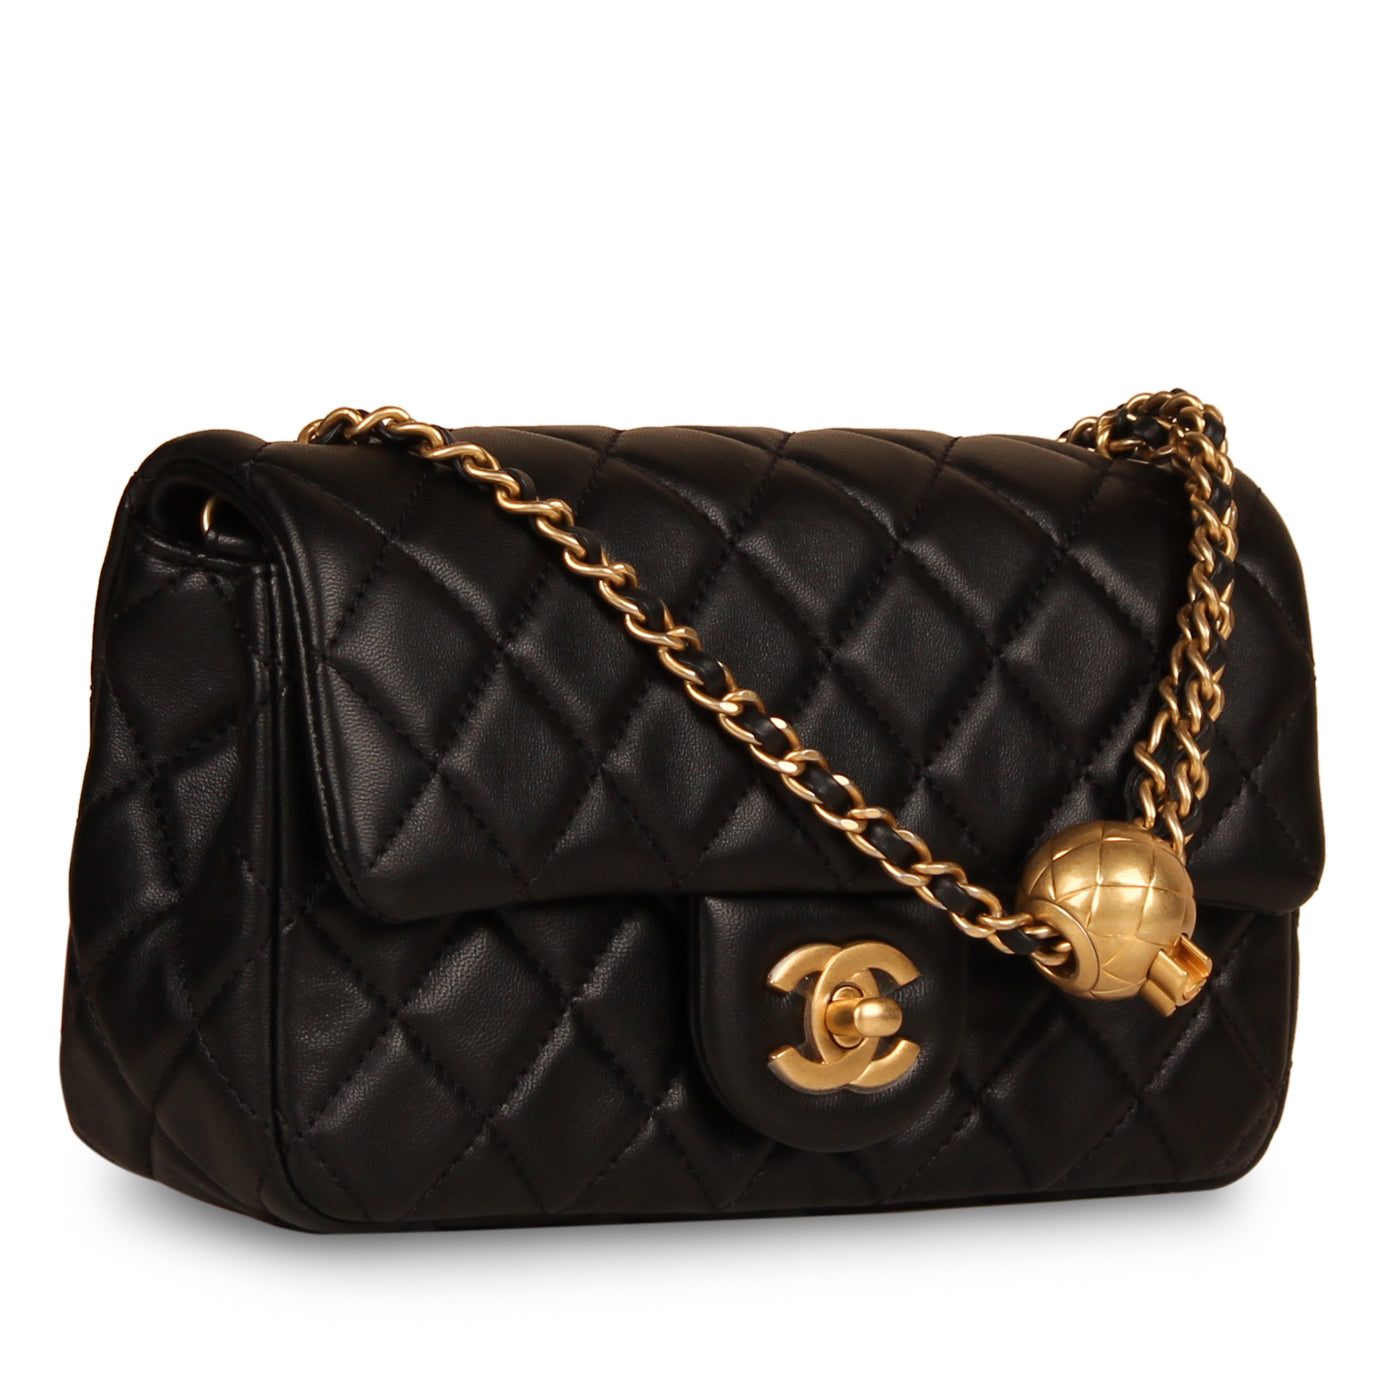 CHANEL MINI FLAP RECTANGULAR BAG BLACK CAVIAR  httpwwwlindsaysdiariescom  Chanel classic flap Chanel flap bag  Chanel handbags